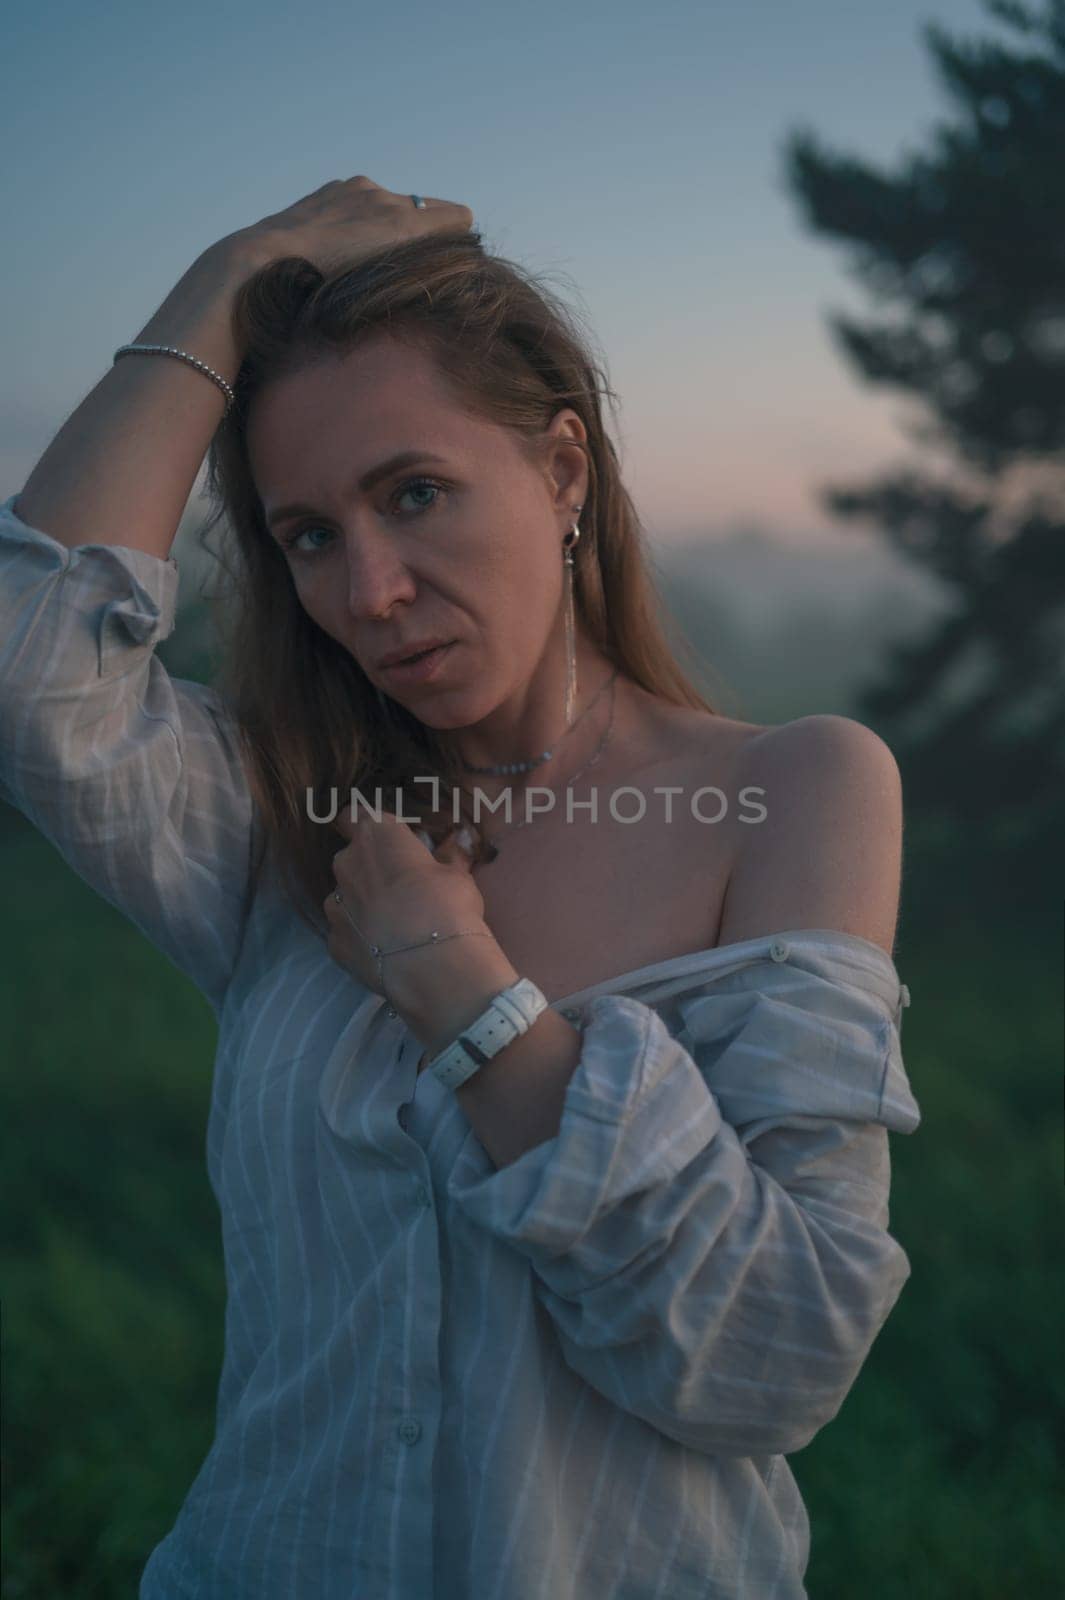 Woman in a field with misty fog